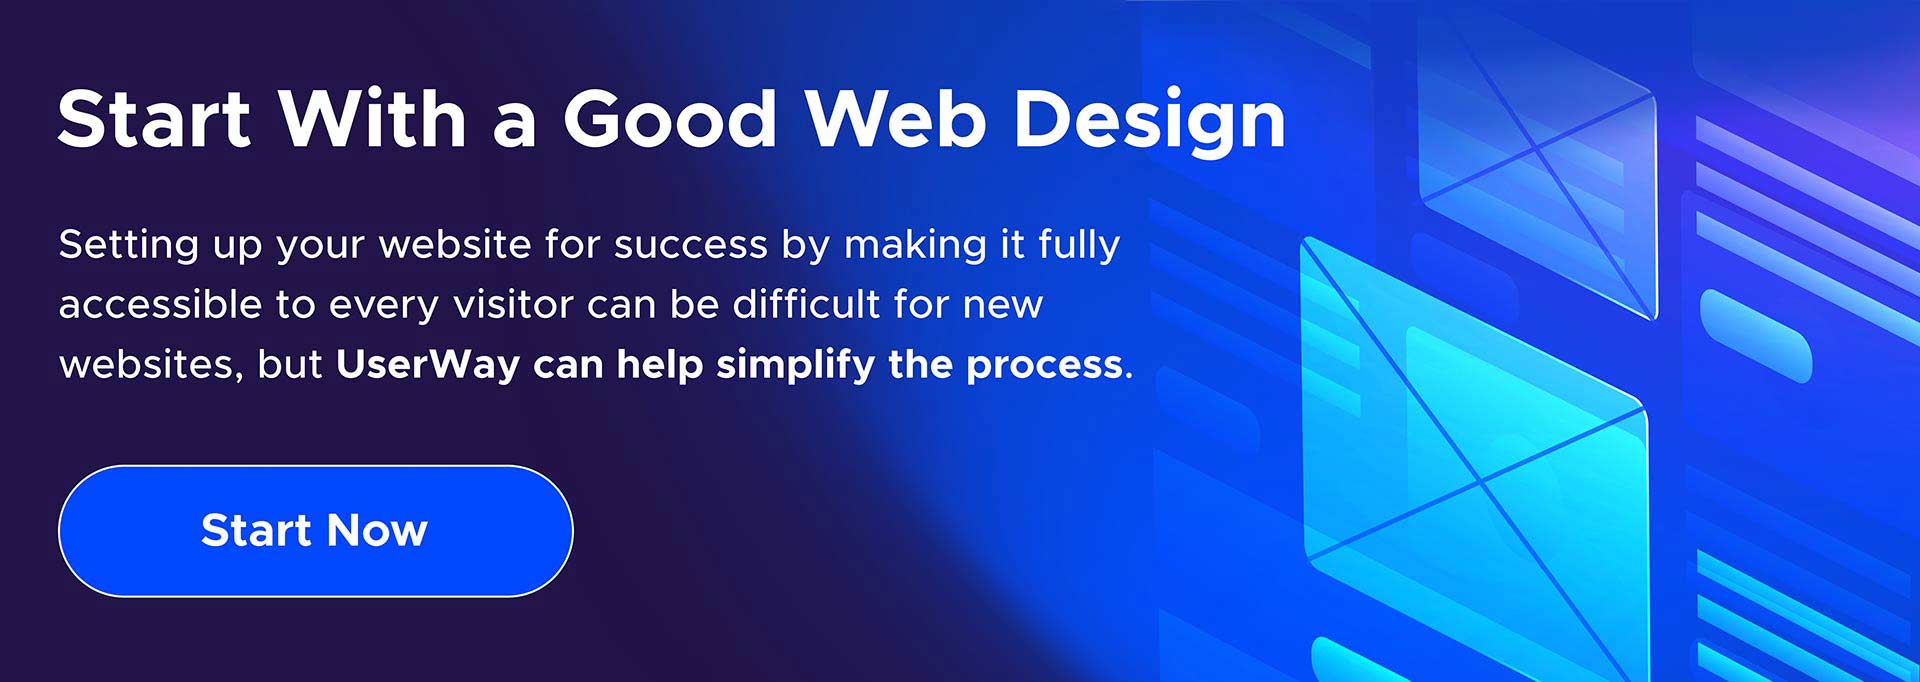 Start with a good web design 